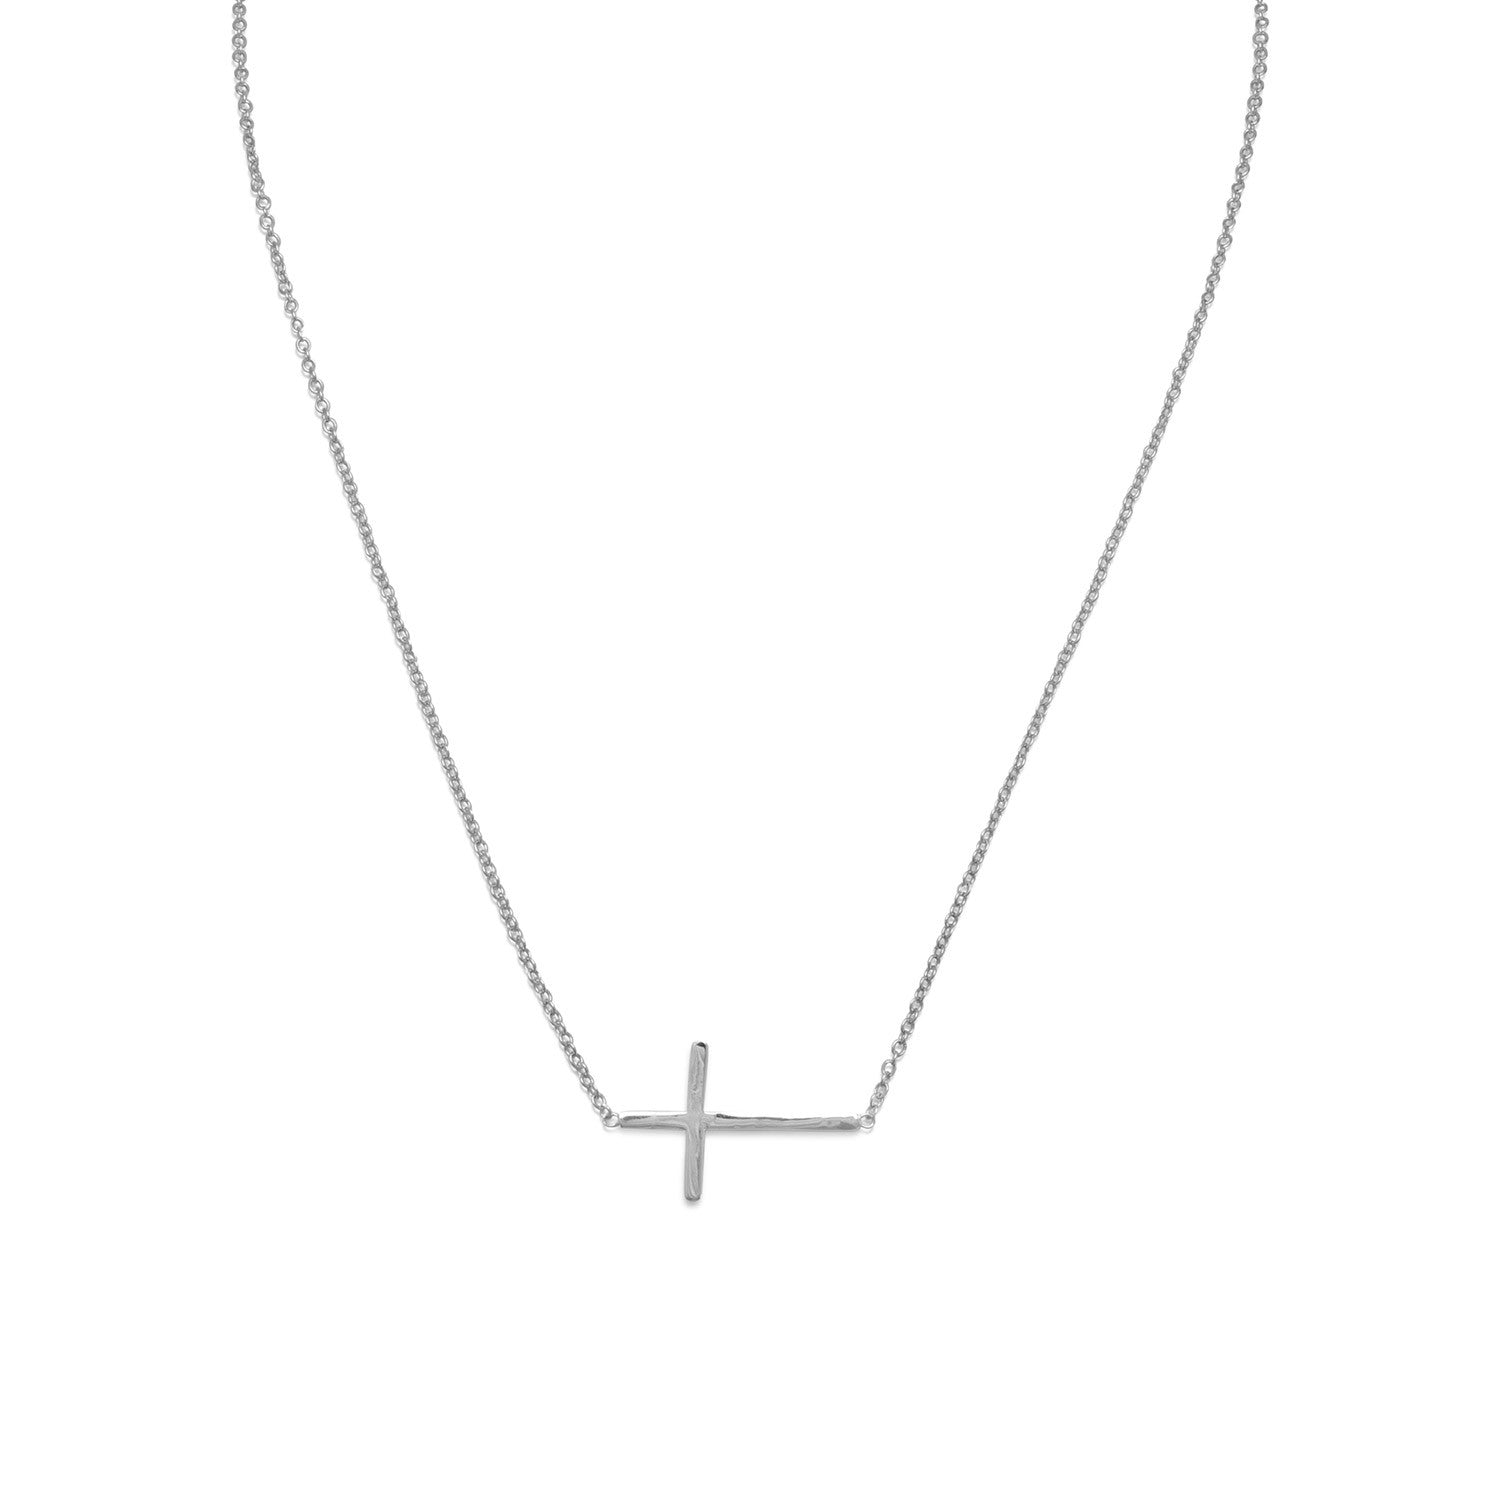 16" + 2" Rhodium Plated Polished Sideways Cross Necklace